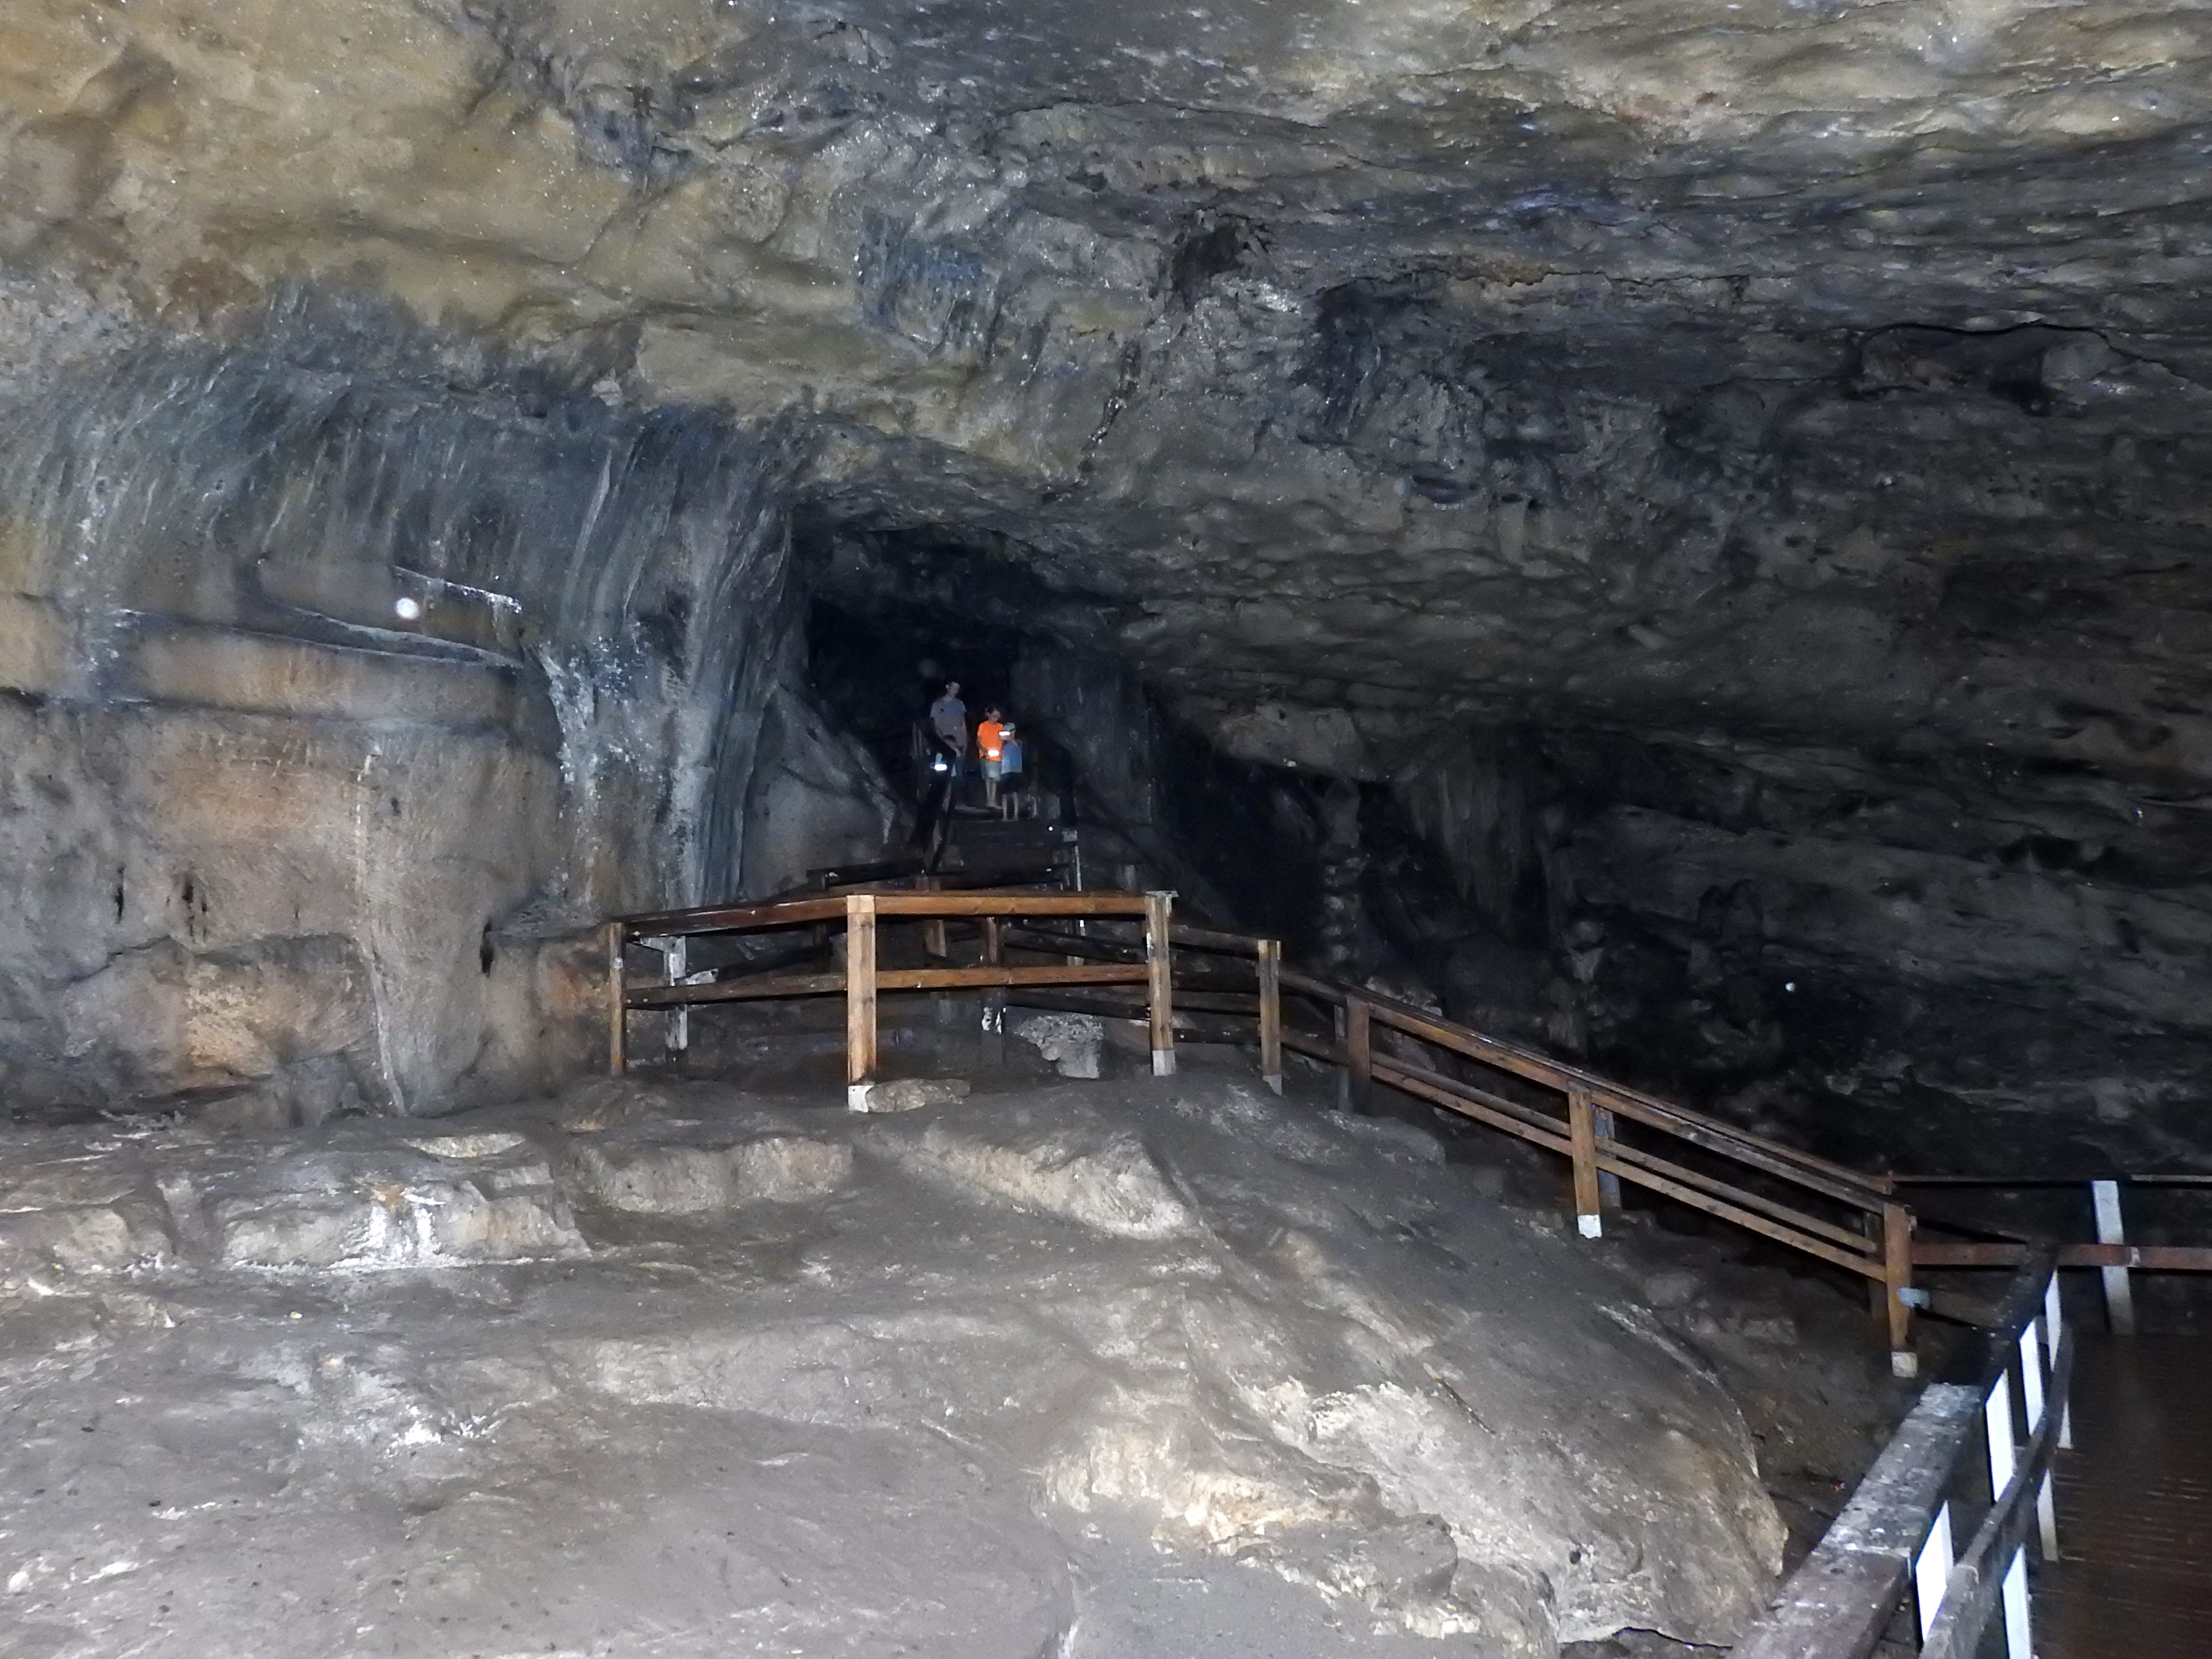 The railed path snaking through the cavern